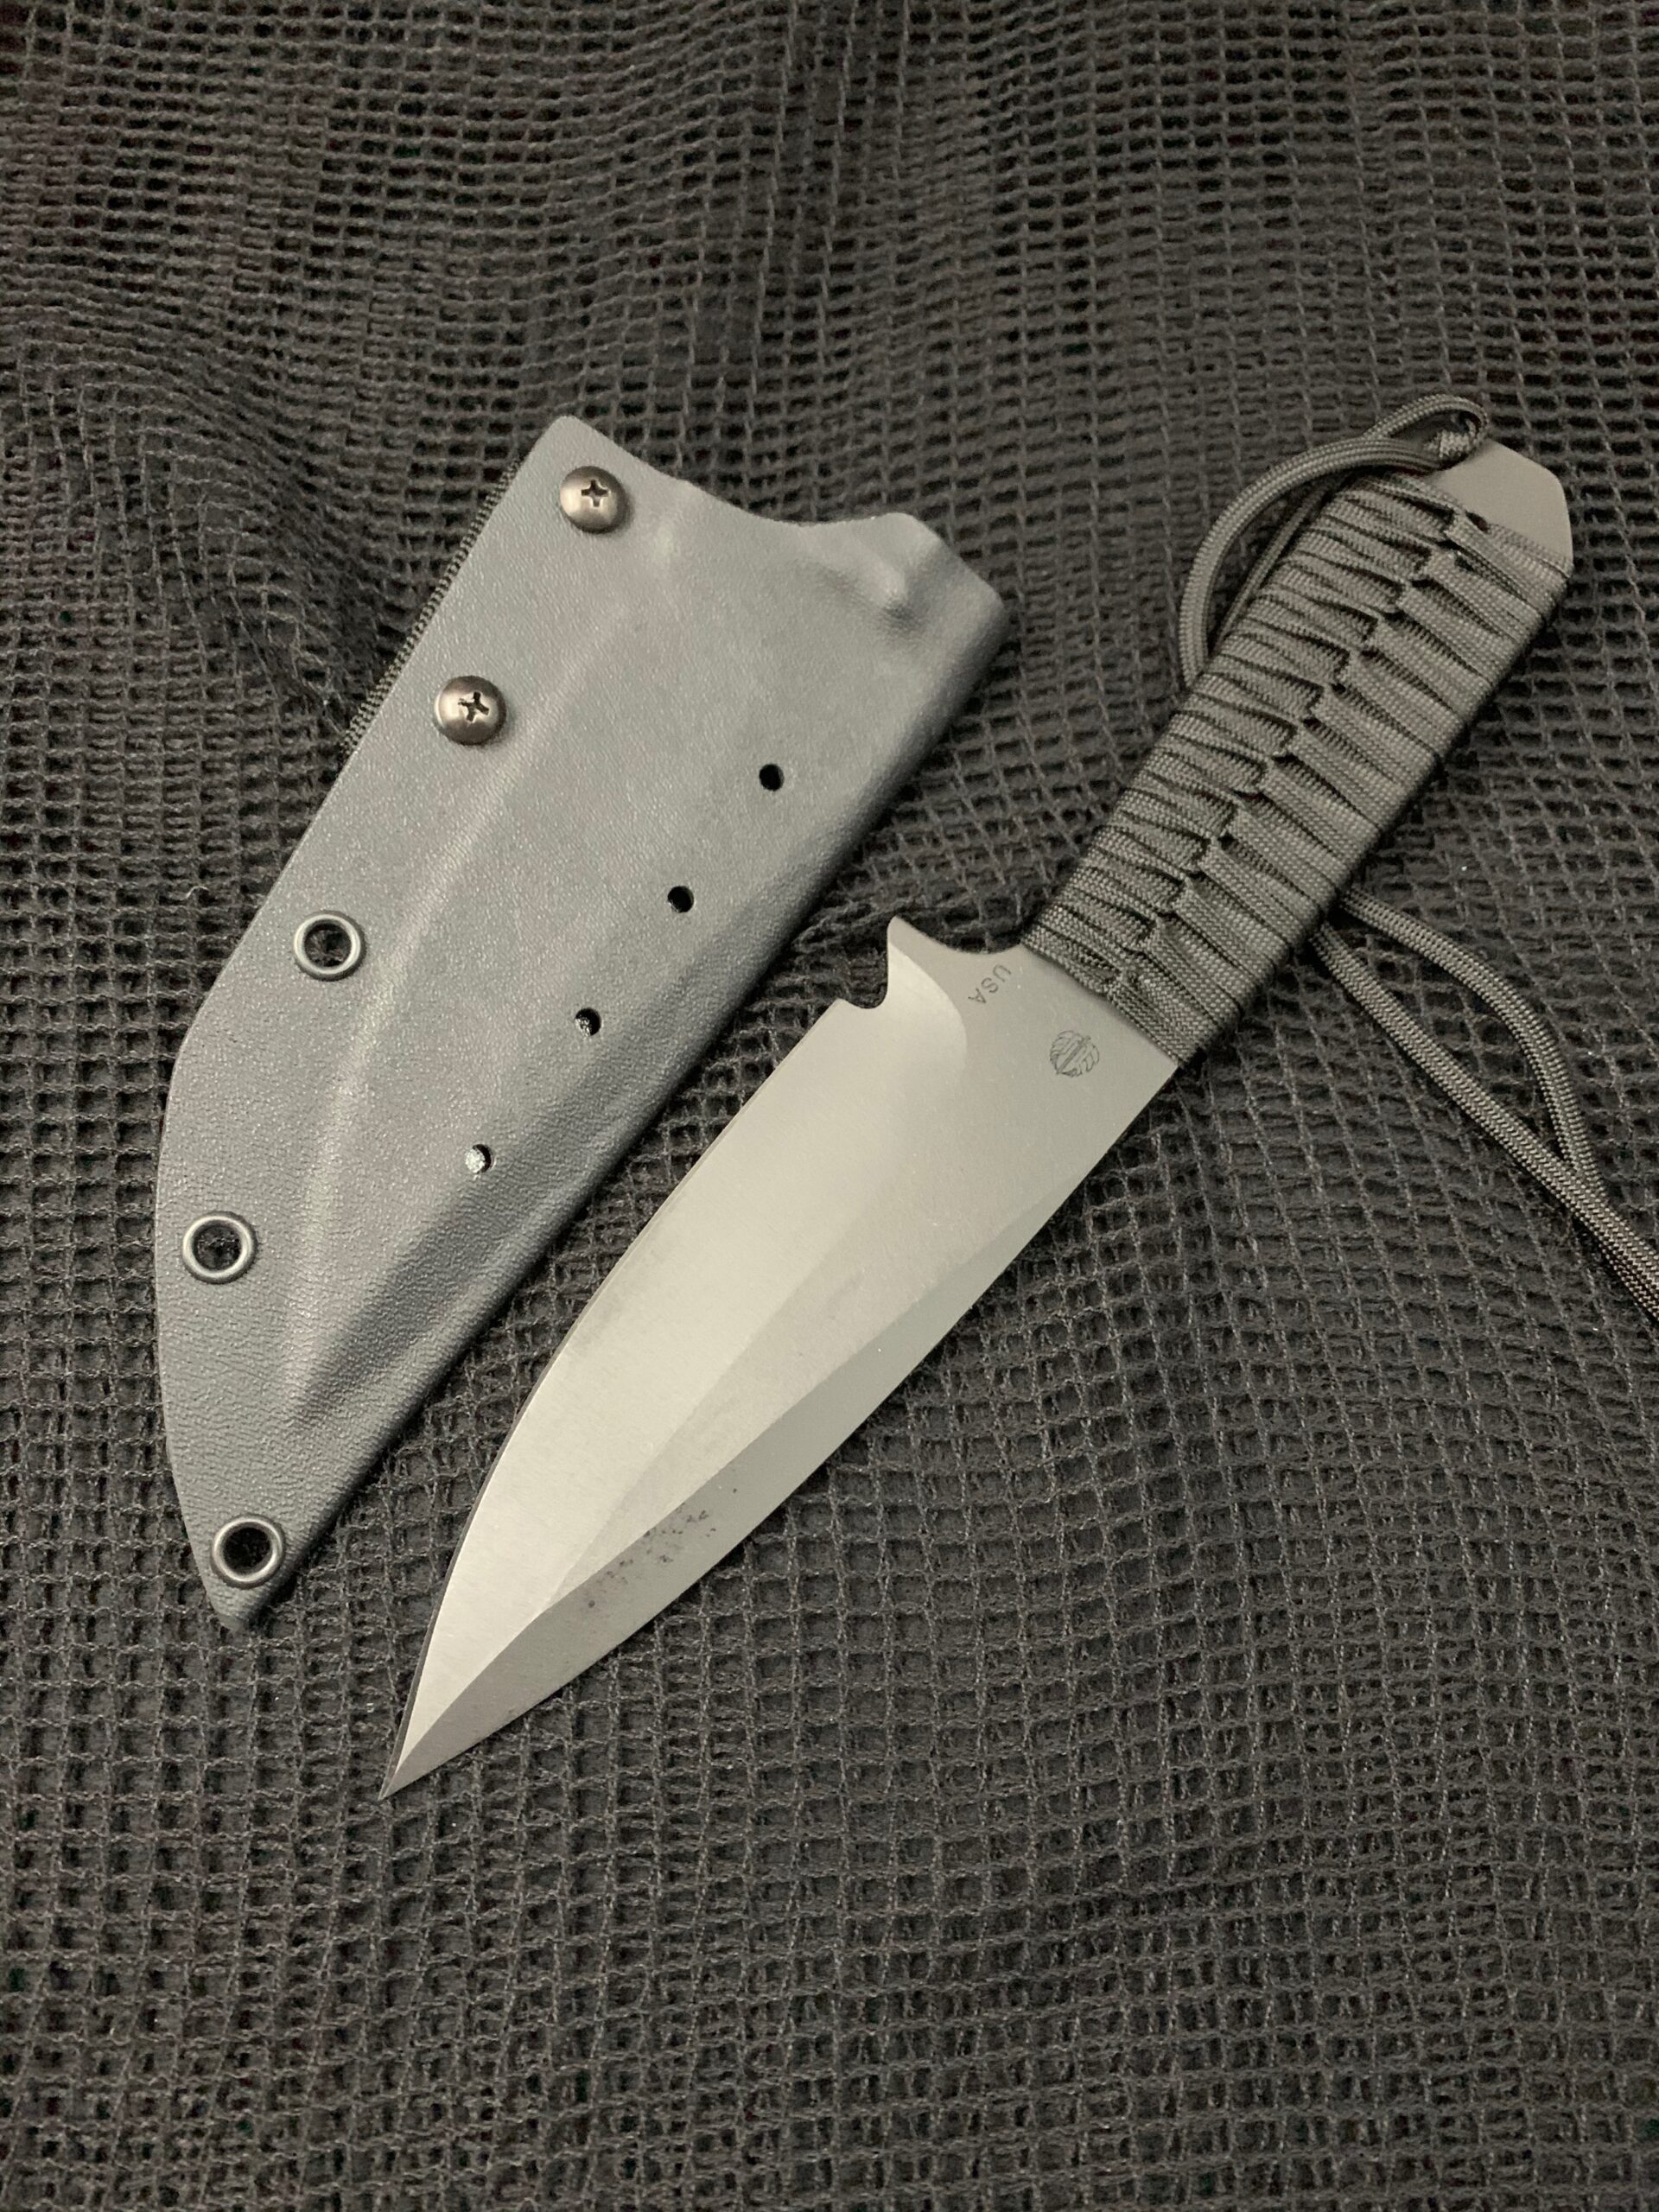 strider knives for sale in stock